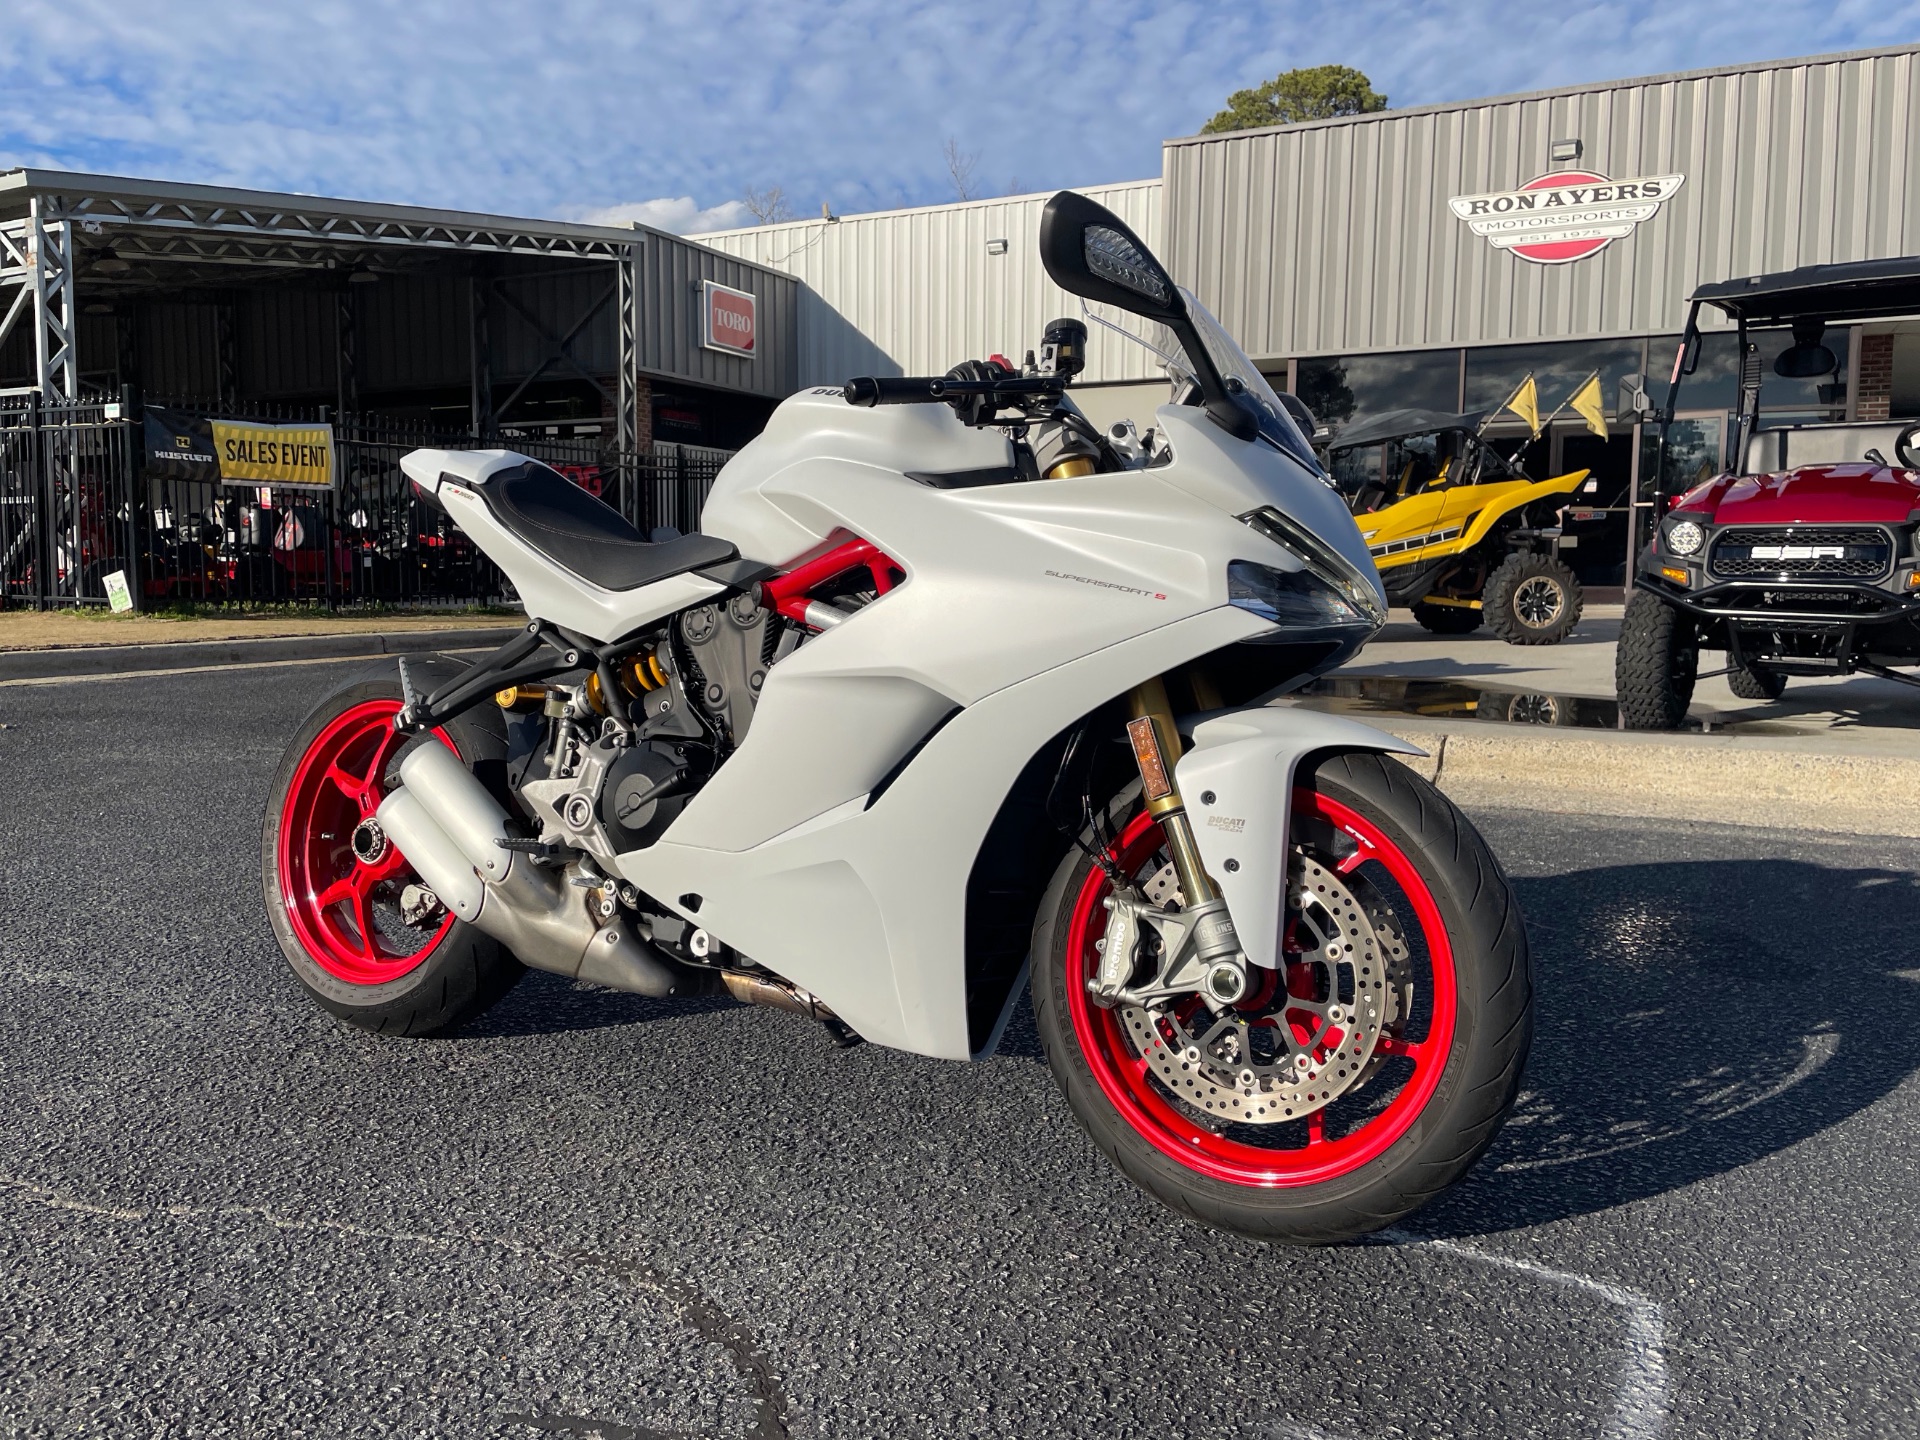 2020 Ducati SuperSport S in Greenville, North Carolina - Photo 2